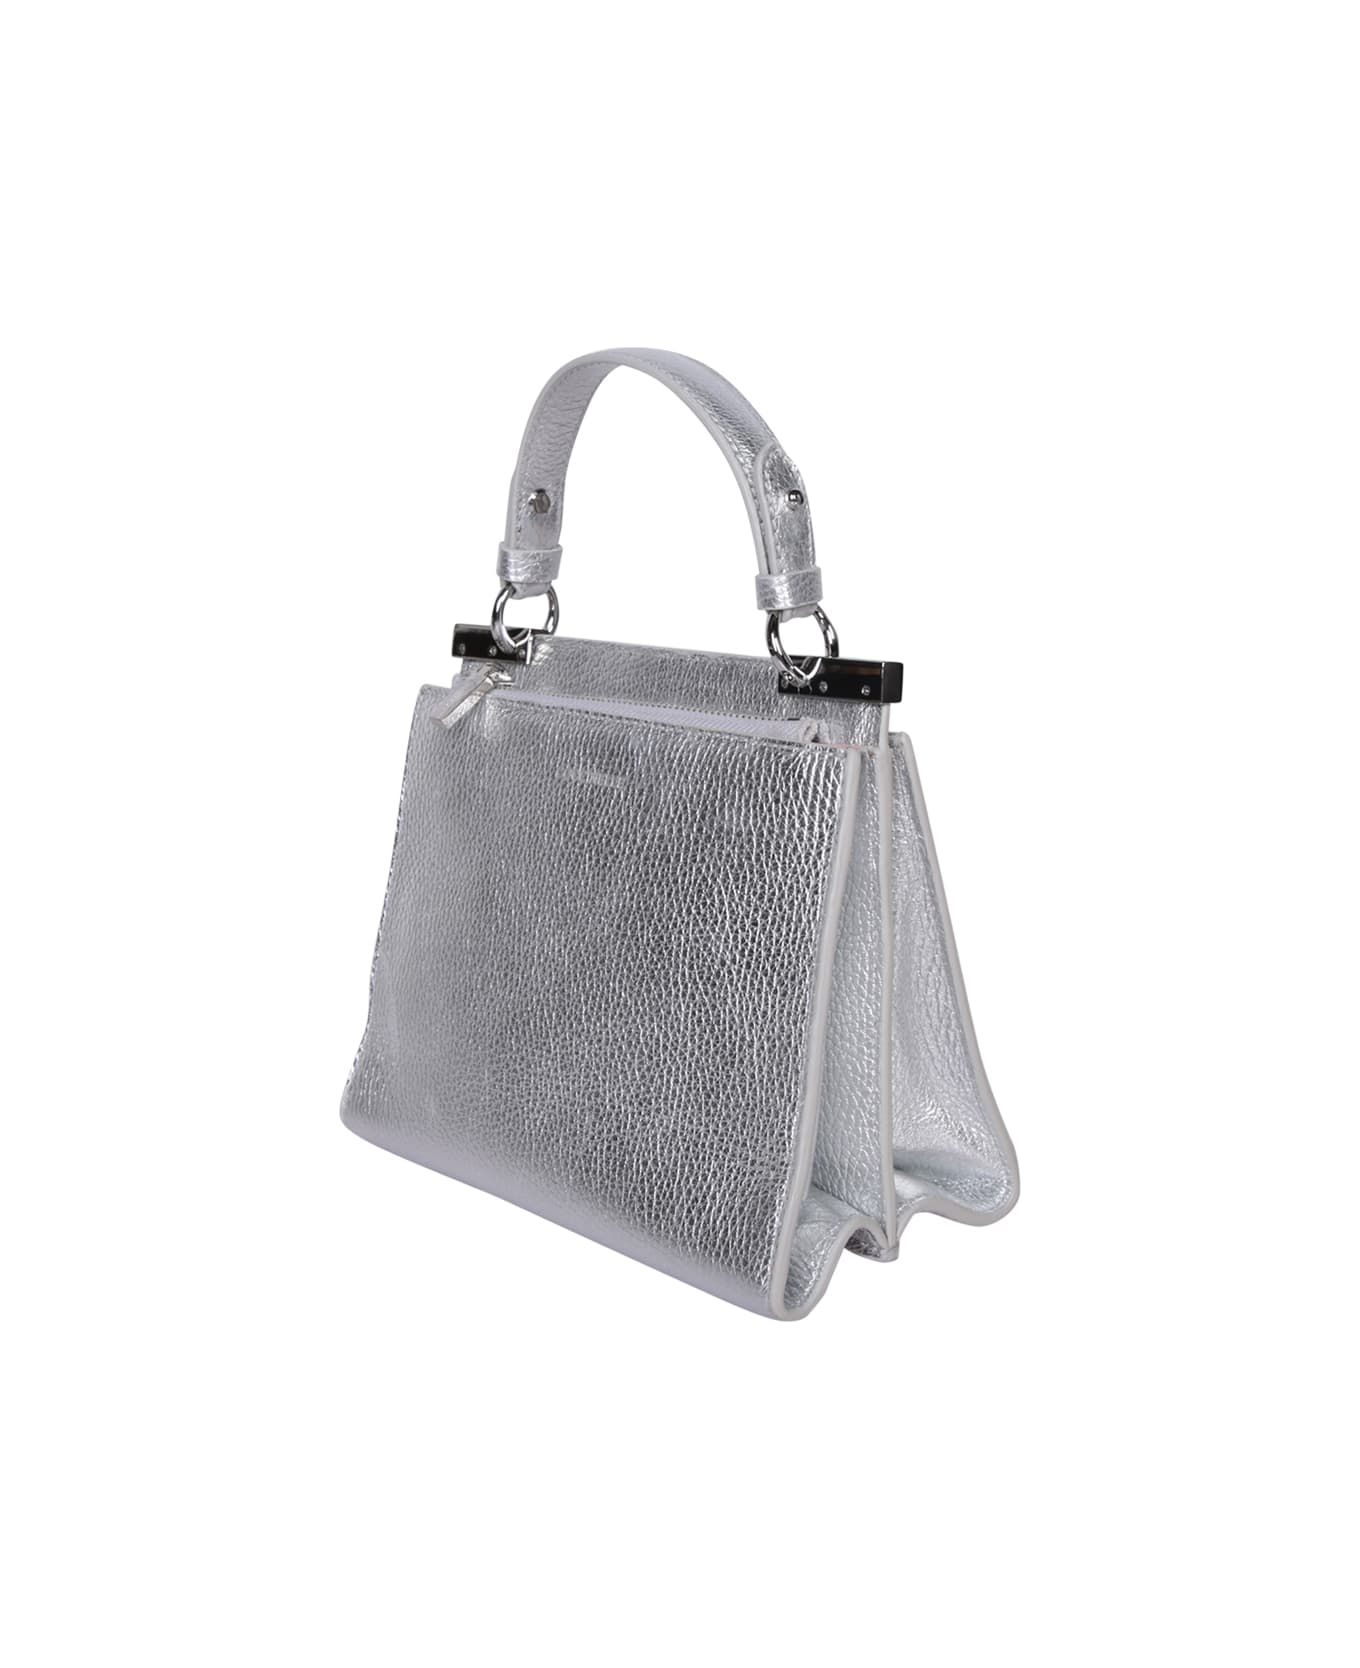 Coccinelle Binxie Mini Silver Bag - Metallic